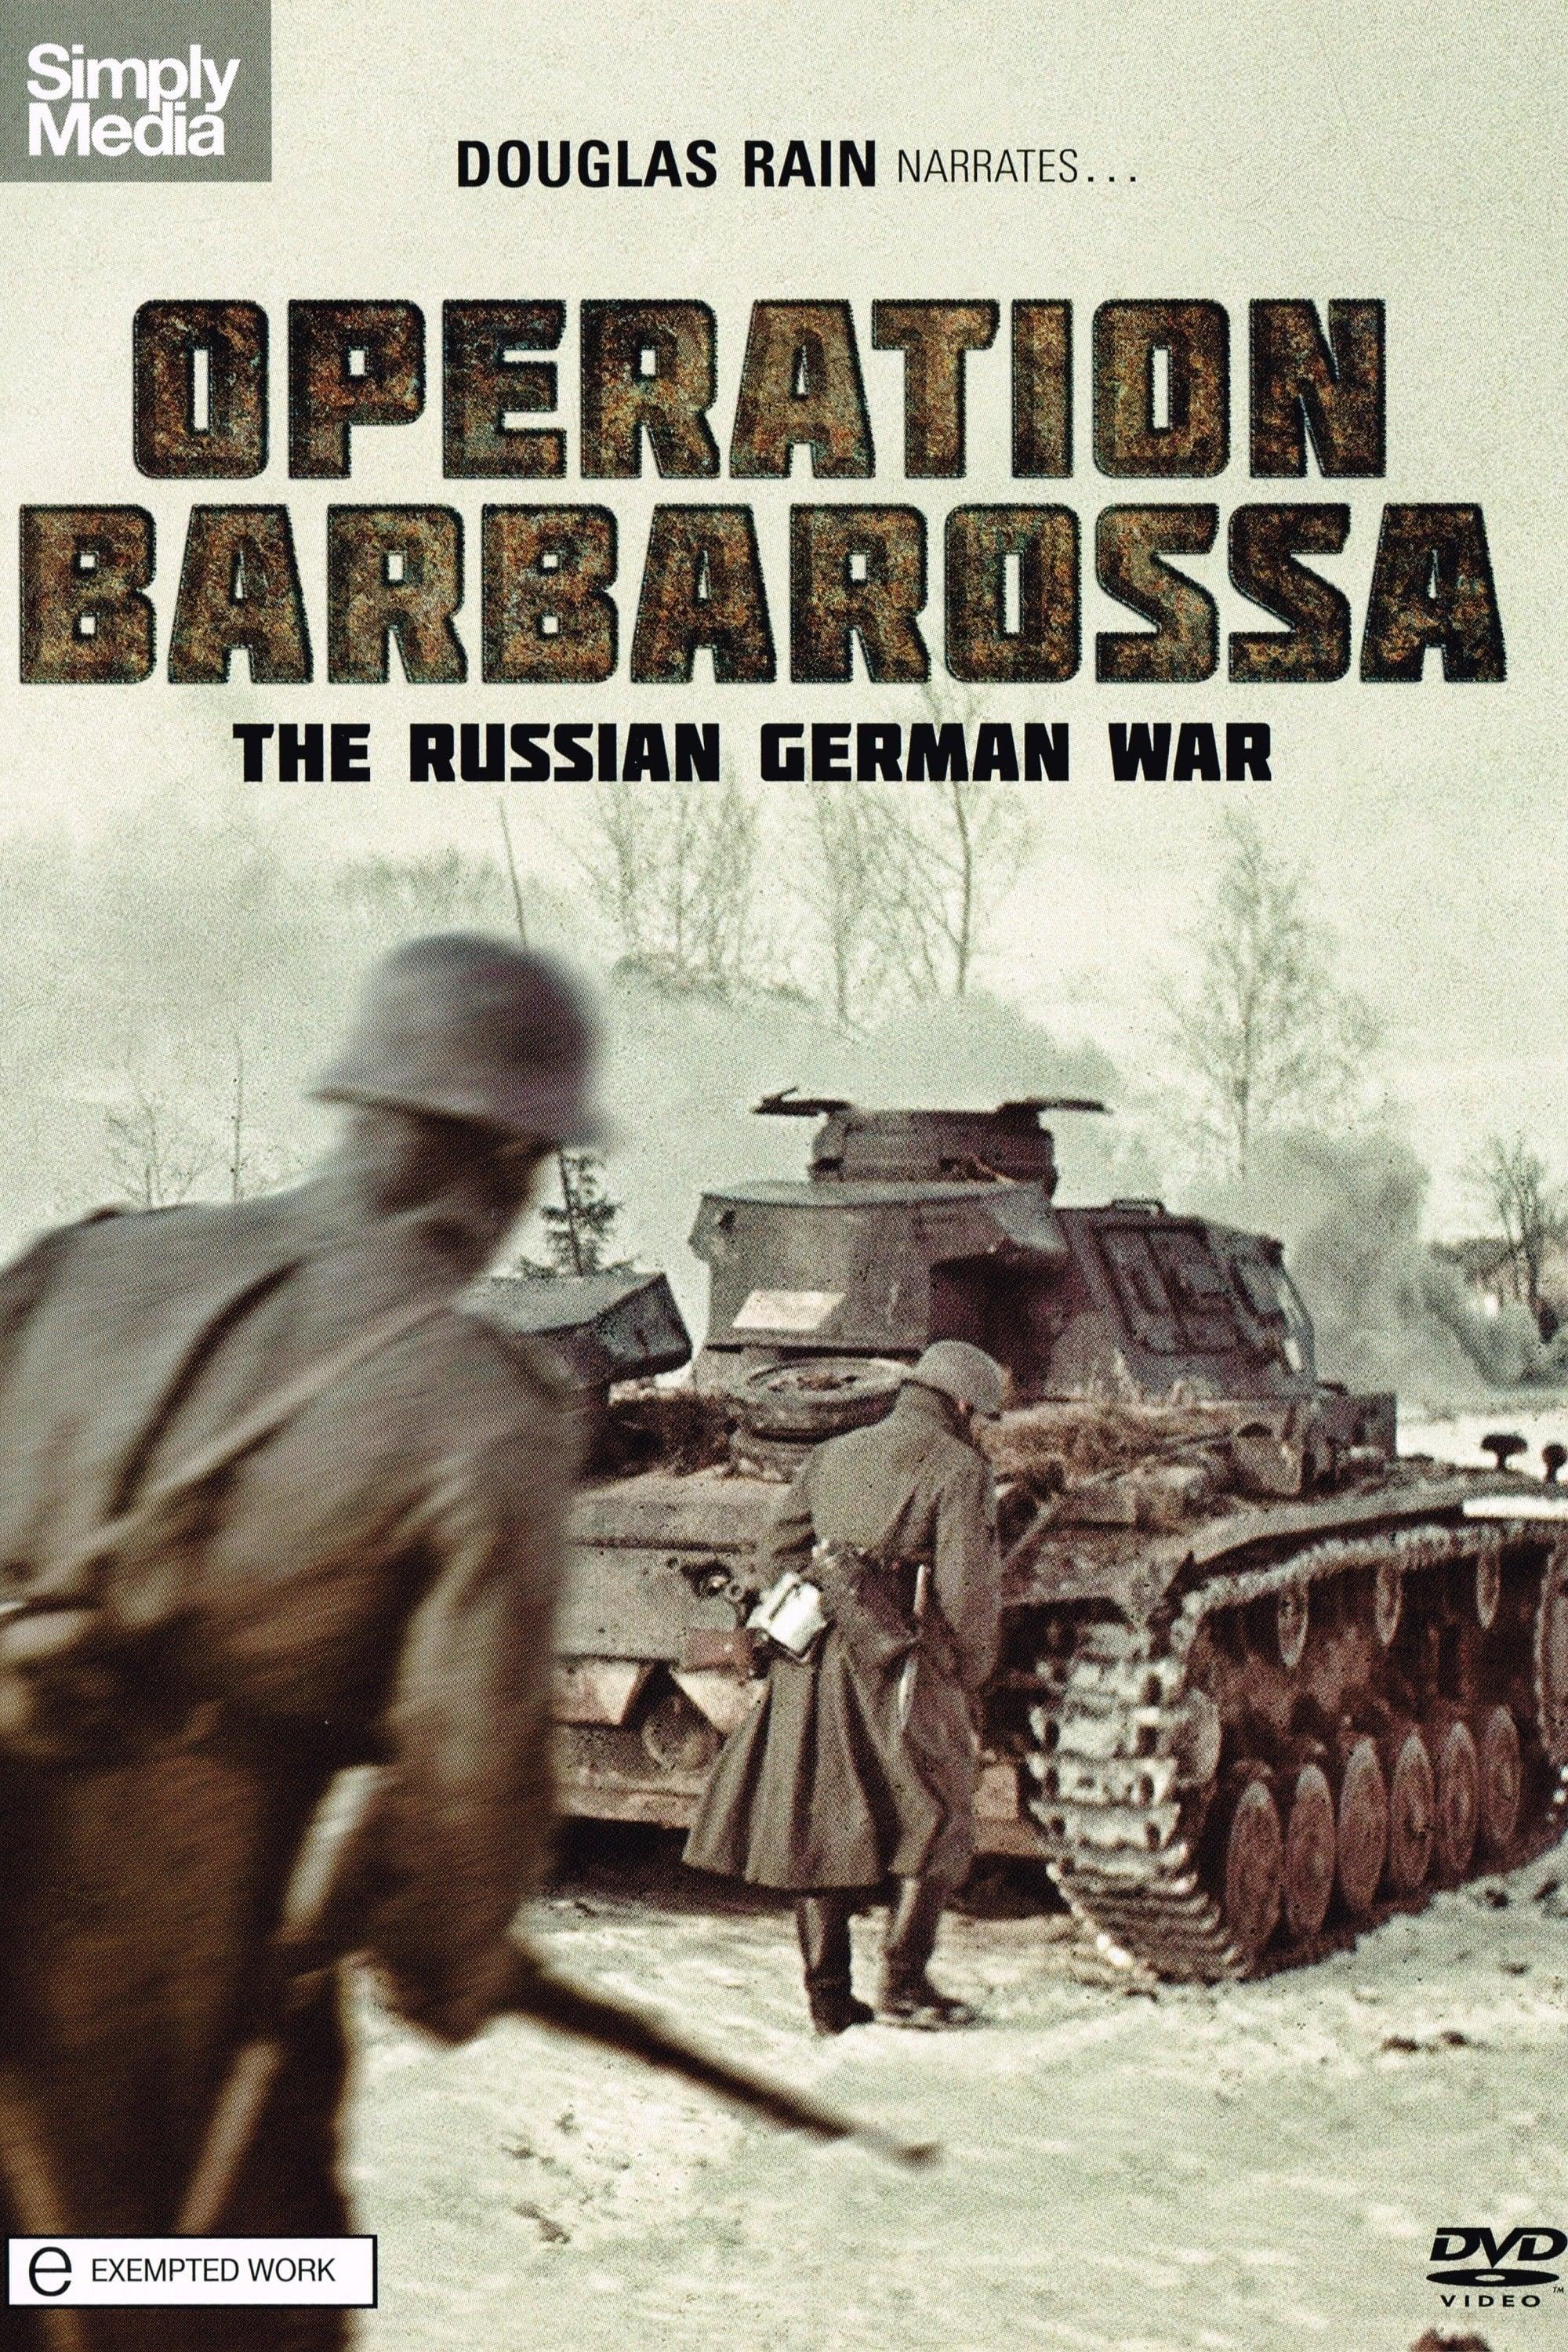 The Russian German War poster